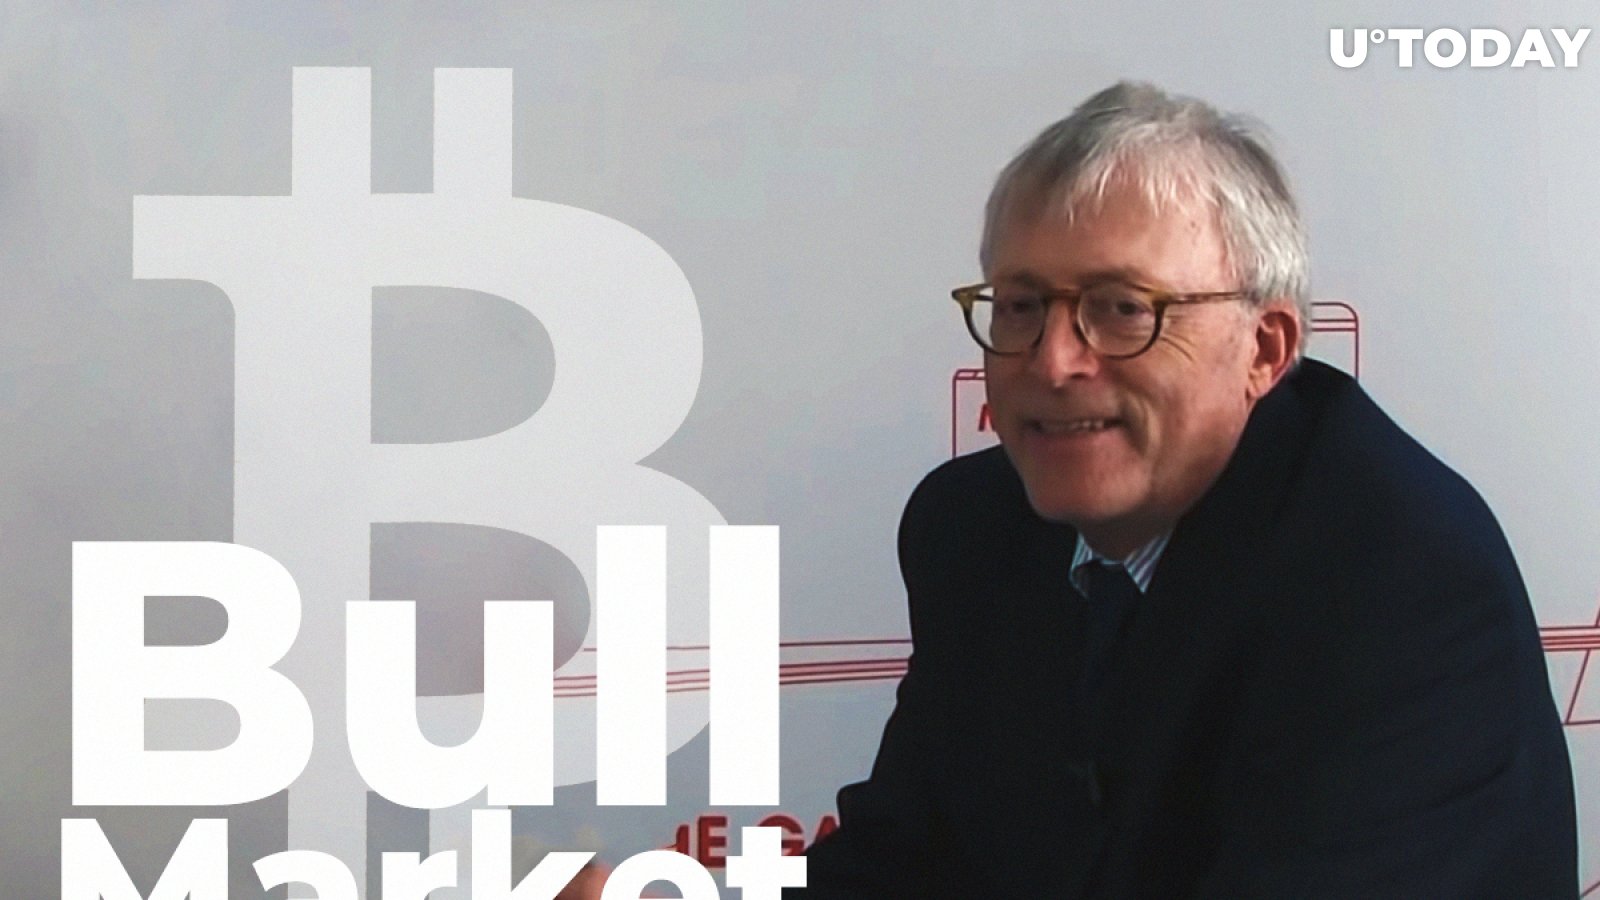 Bitcoin (BTC) Bull Market Has Already Started. Trading Legend Peter Brandt Explains Why